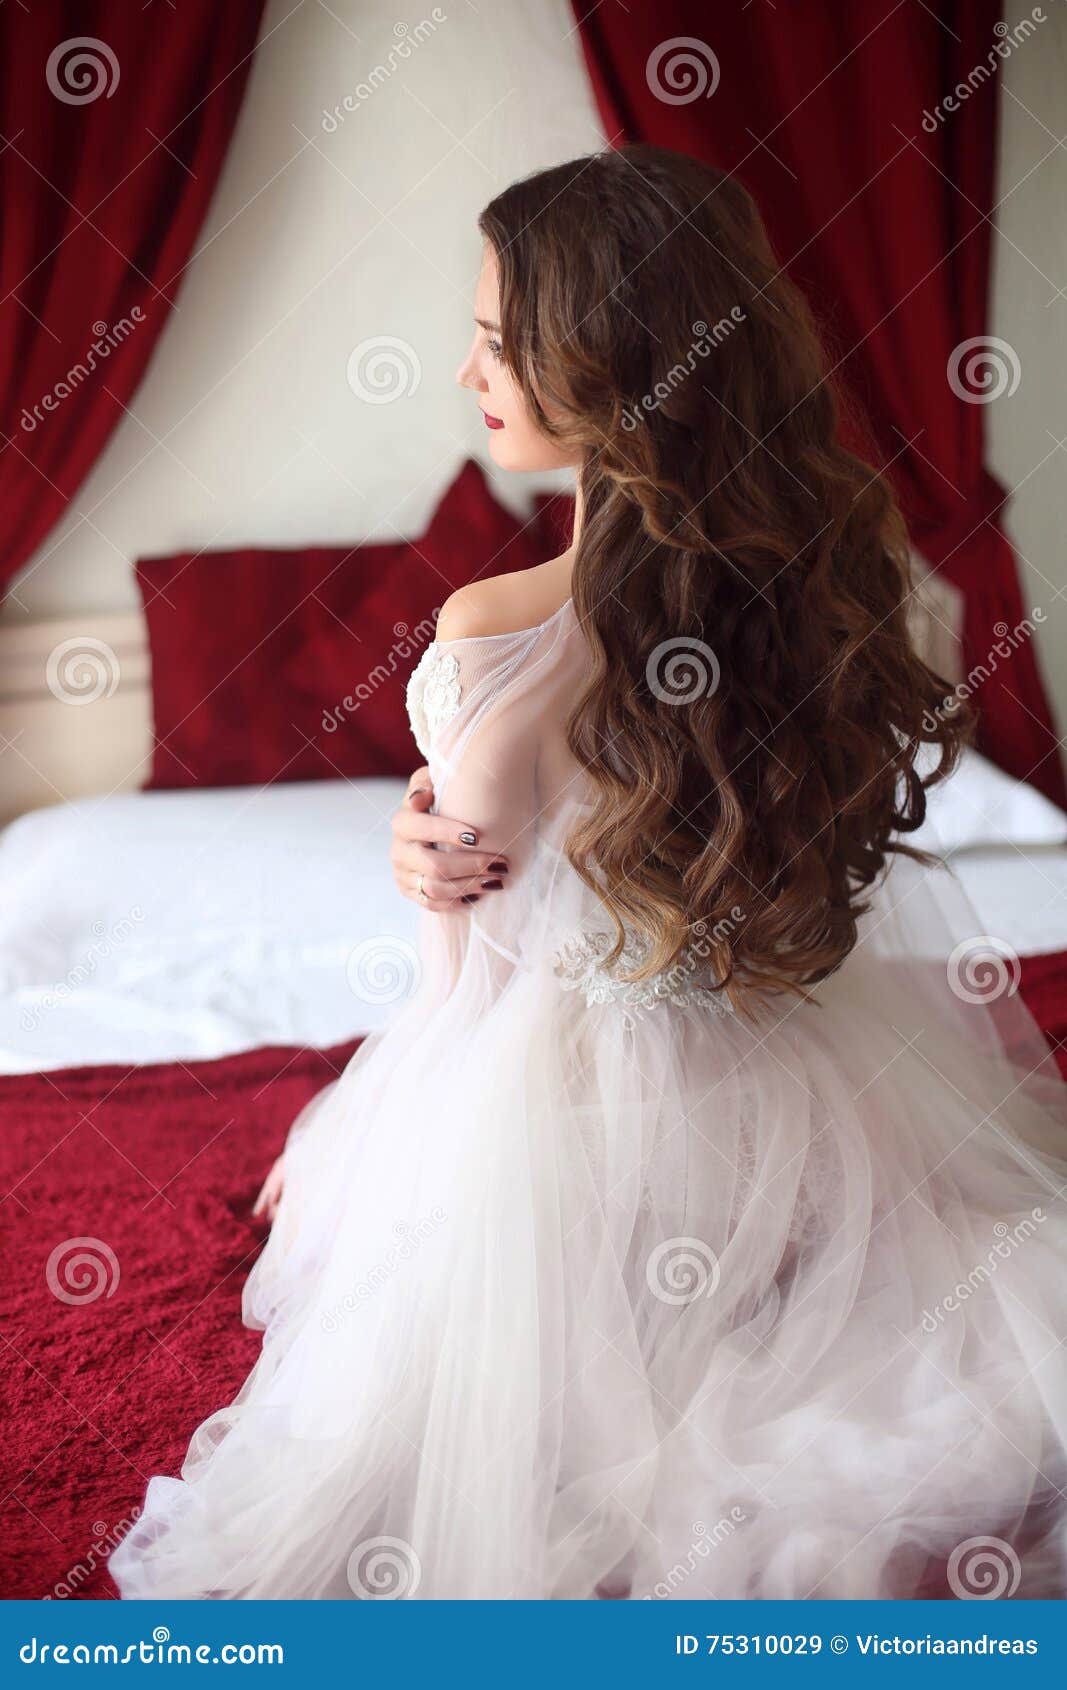 20 Creative and Beautiful Wedding Hairstyles for Long Hair -  Elegantweddinginvites.com Blog | Wedding hairstyles for long hair, Long hair  styles, Long hair wedding styles